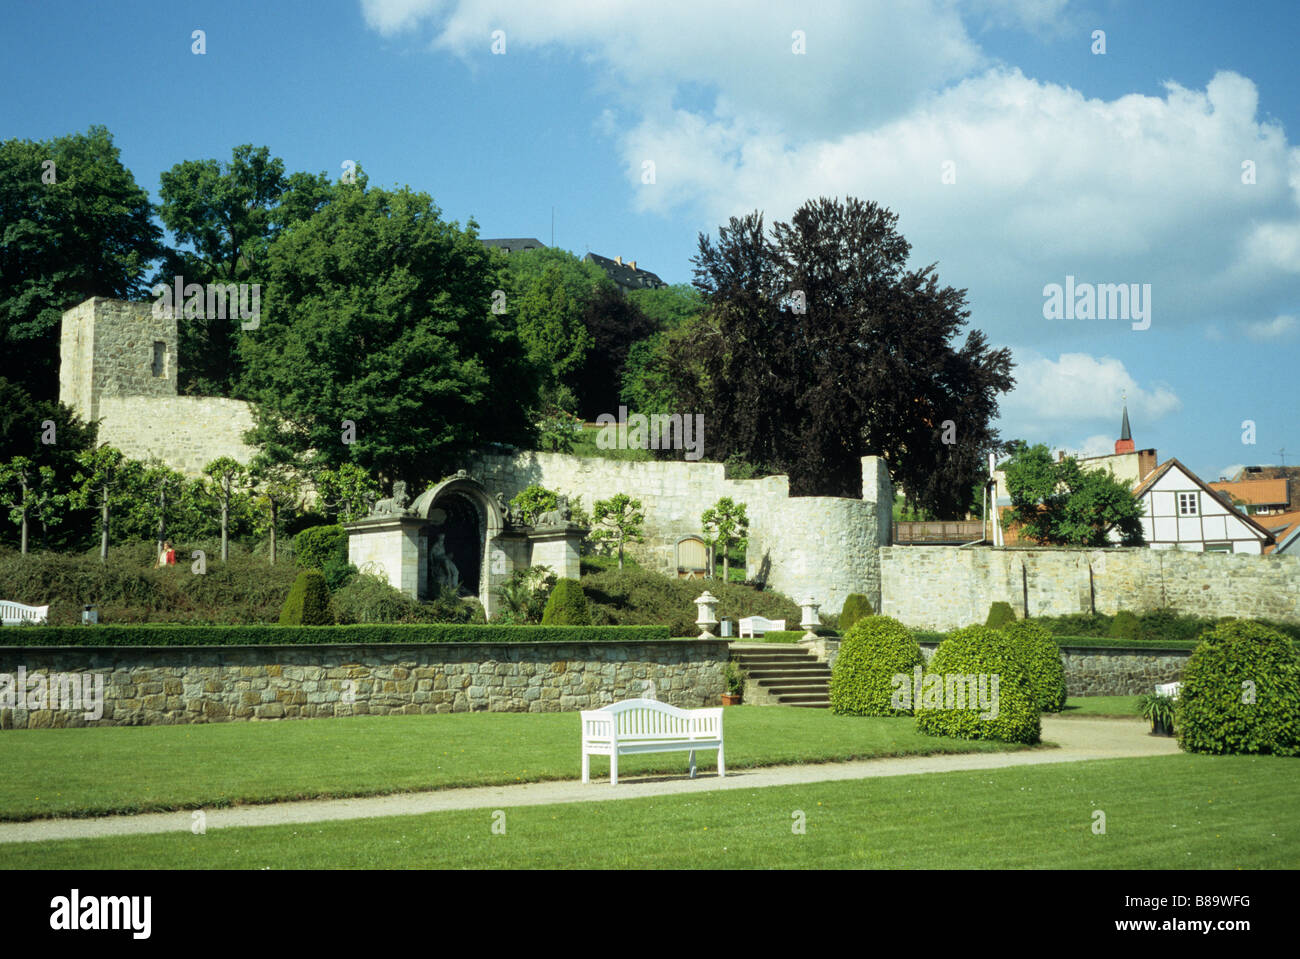 Garden of the Small Castle (kleines Schloss), Blankenburg, Ostharz, Germany Stock Photo